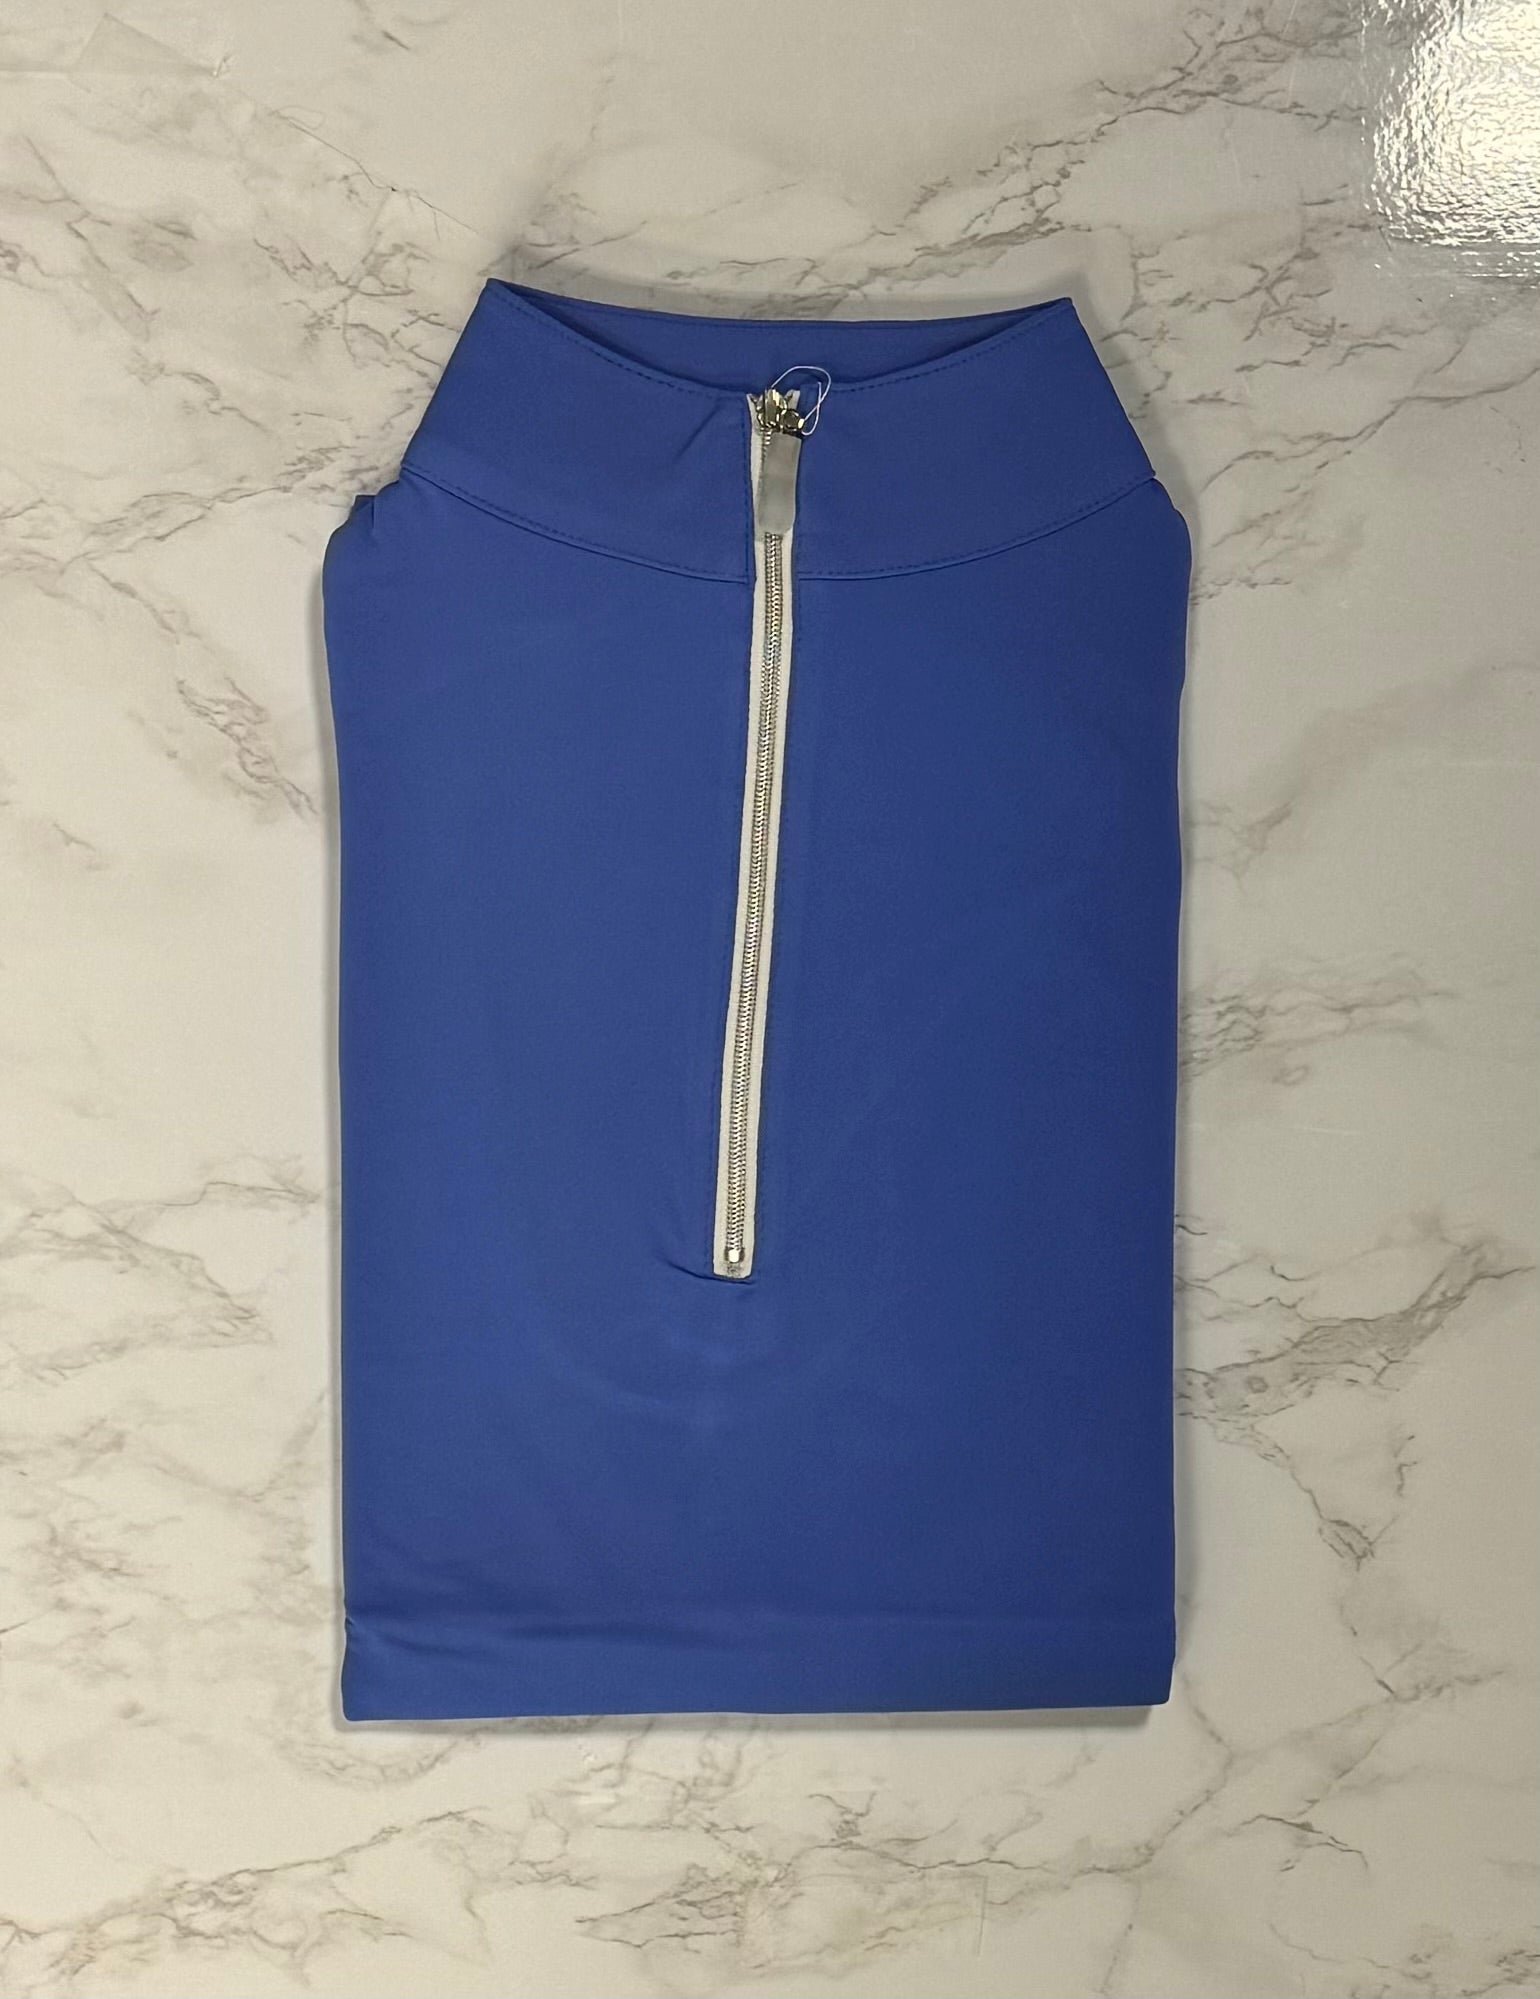 Tailored Sportsman IceFil Zip Top Shirt Long Sleeve